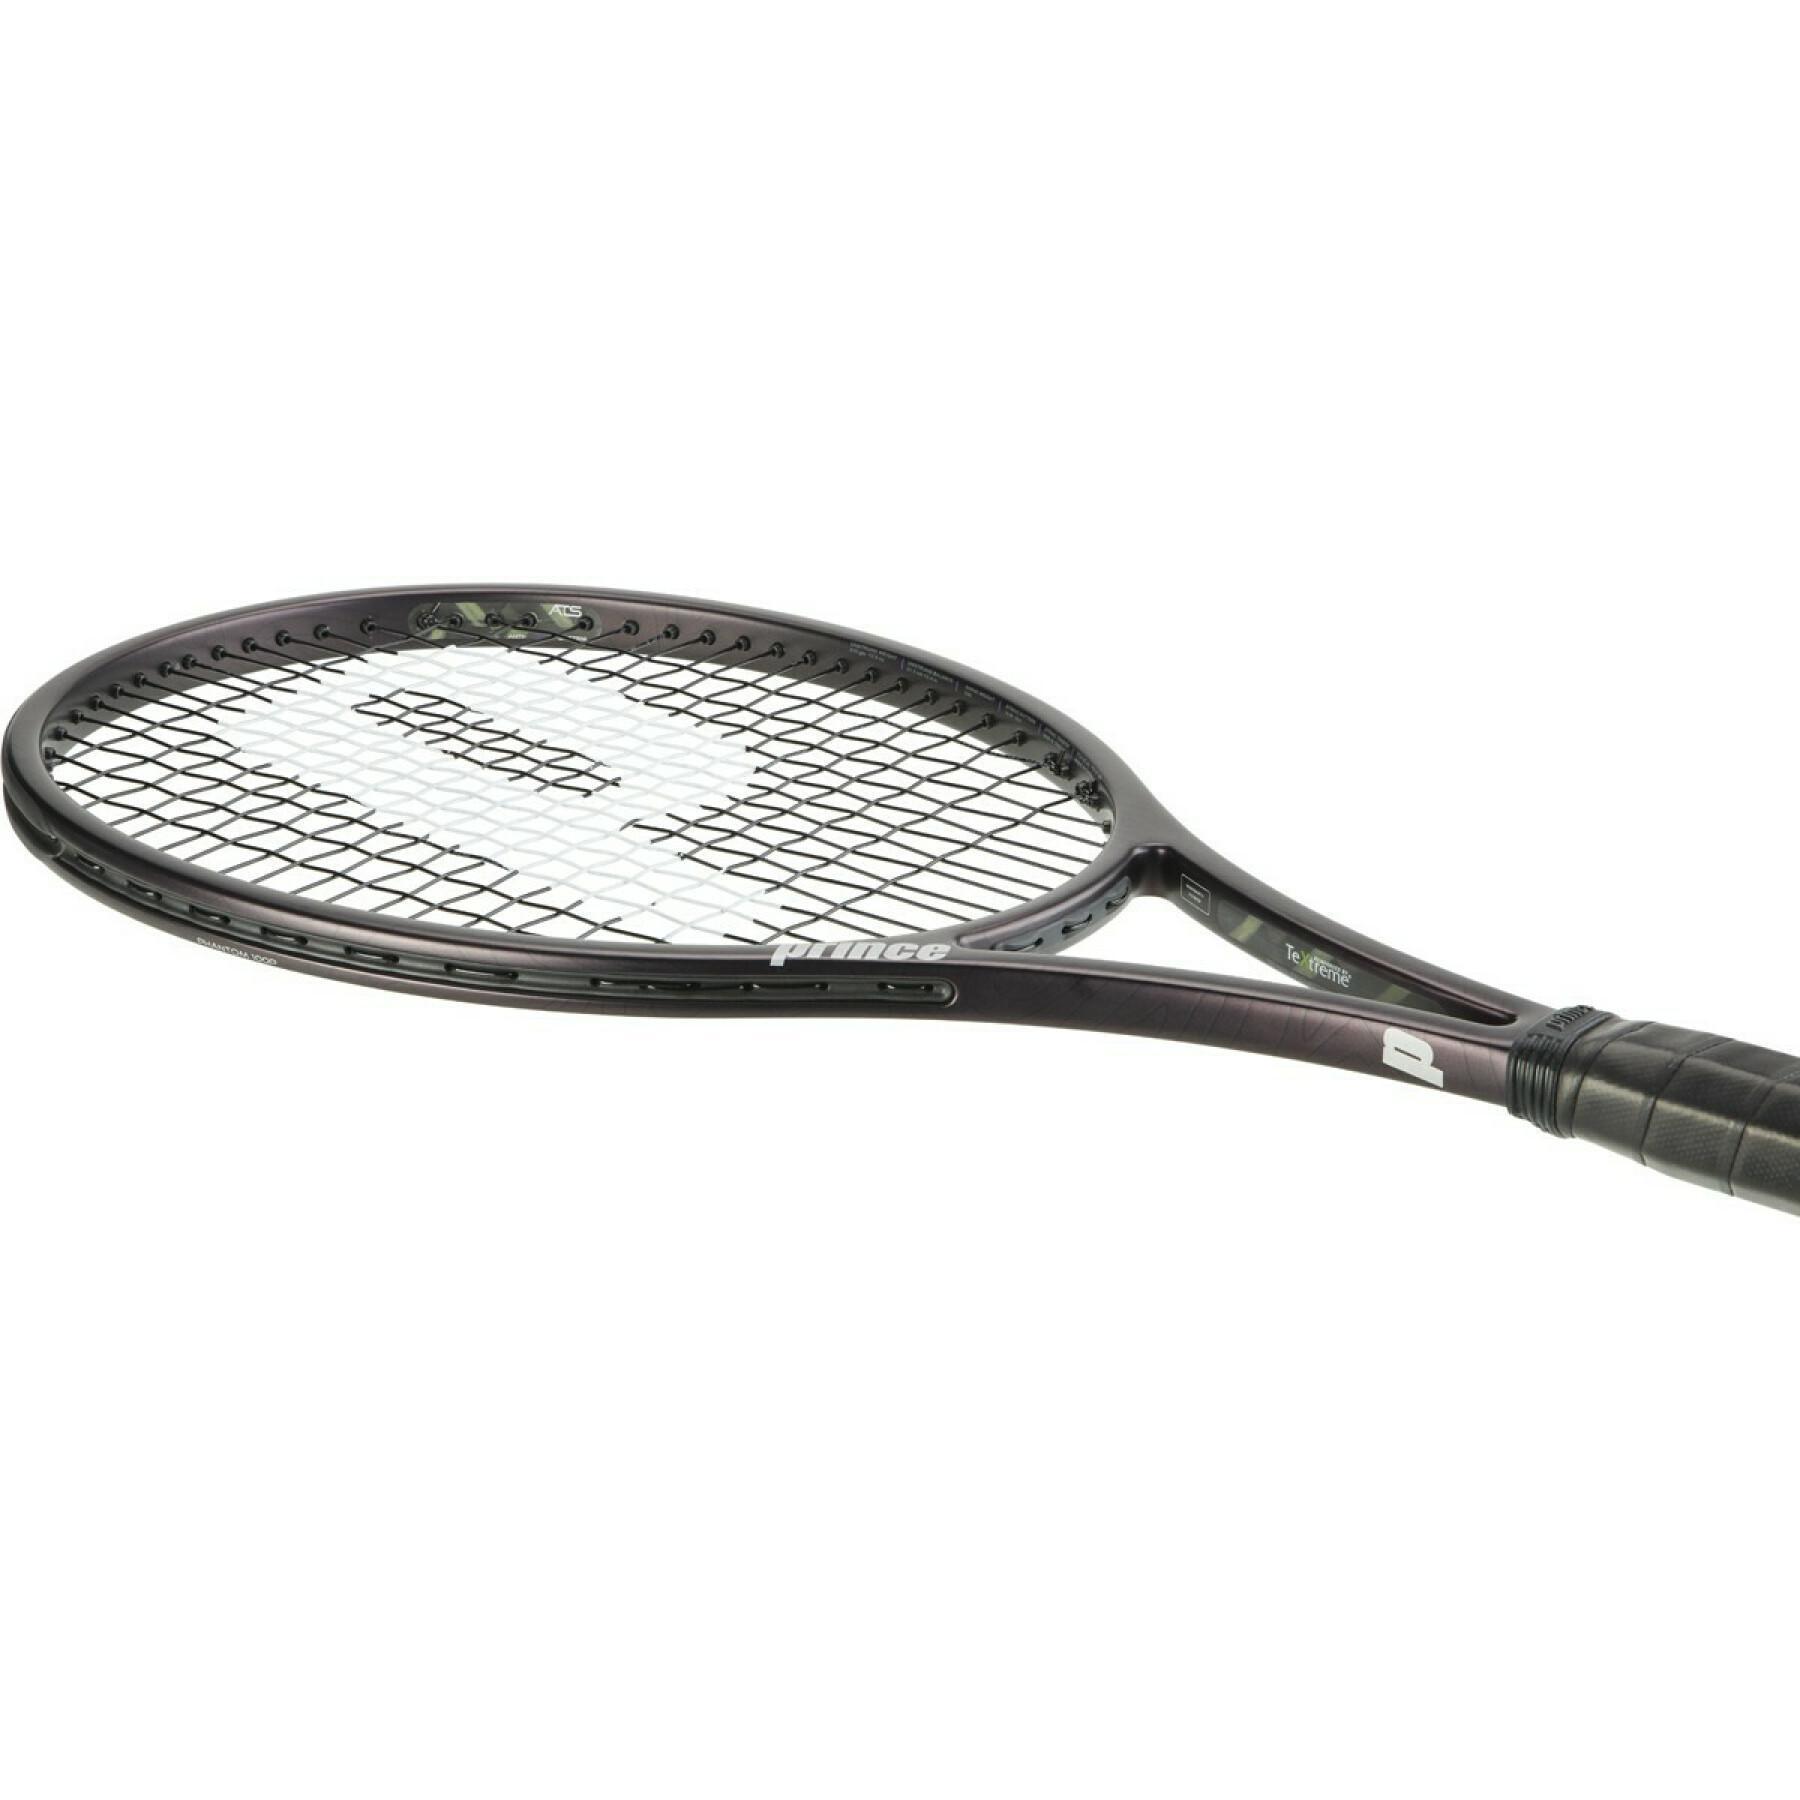 Tennis racket Prince phantom 100p